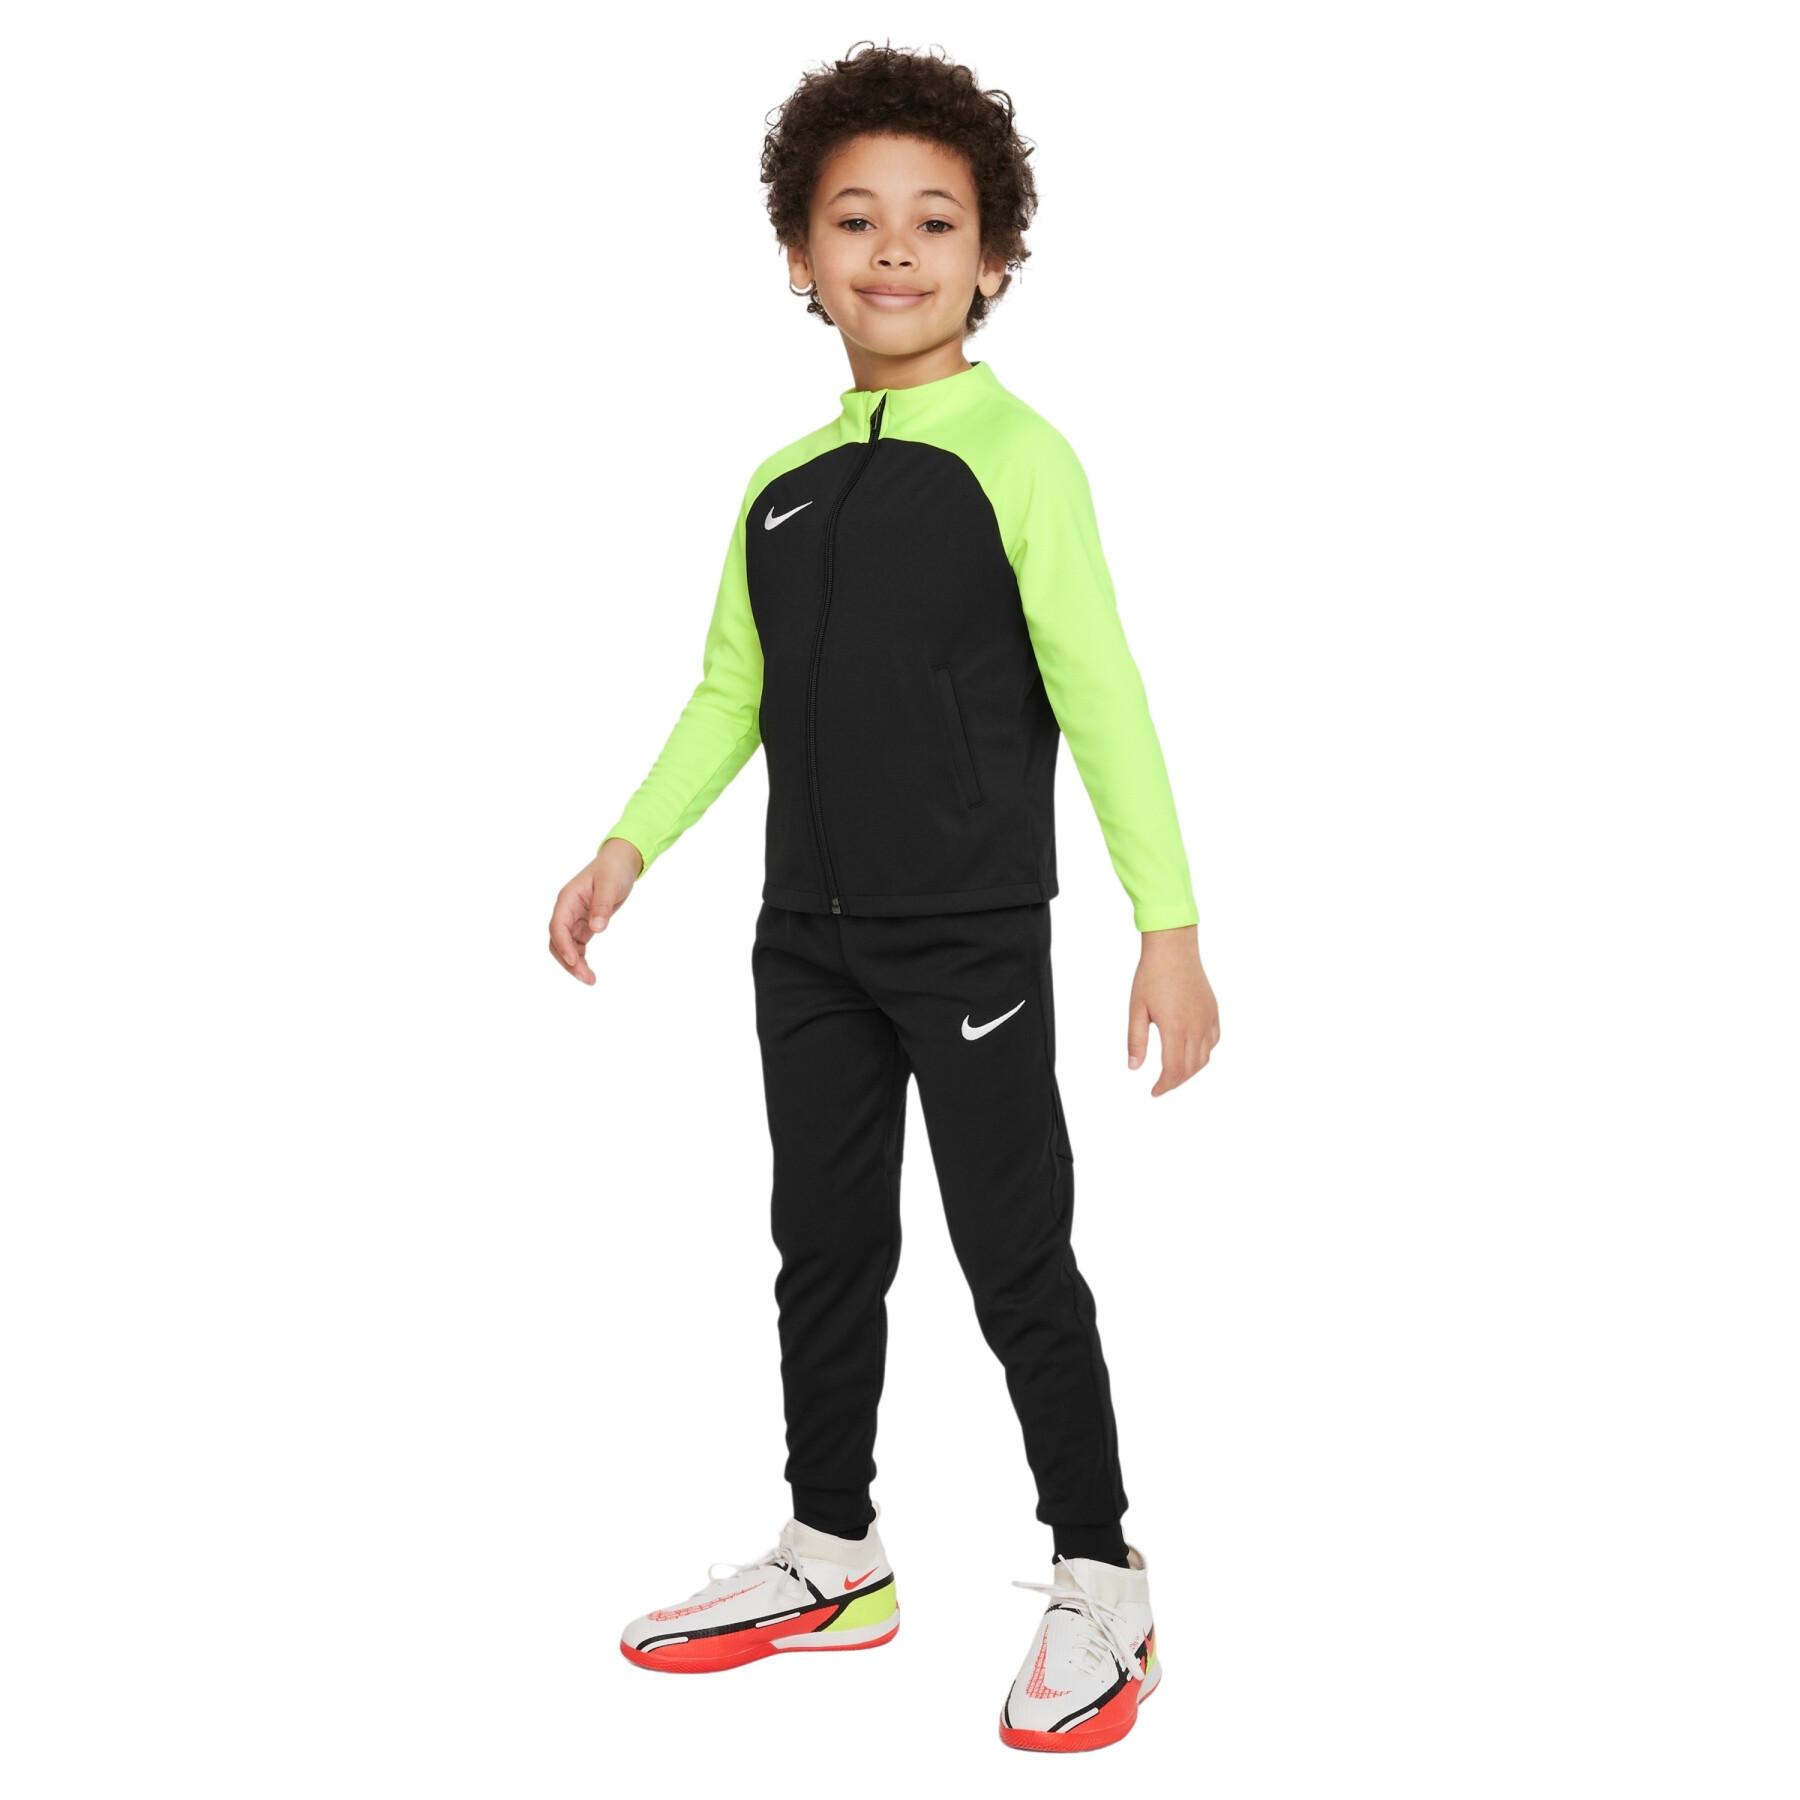 Kids tracksuit set Nike Tracksuit Tricot Junior 868572-615 - Tracksuits 